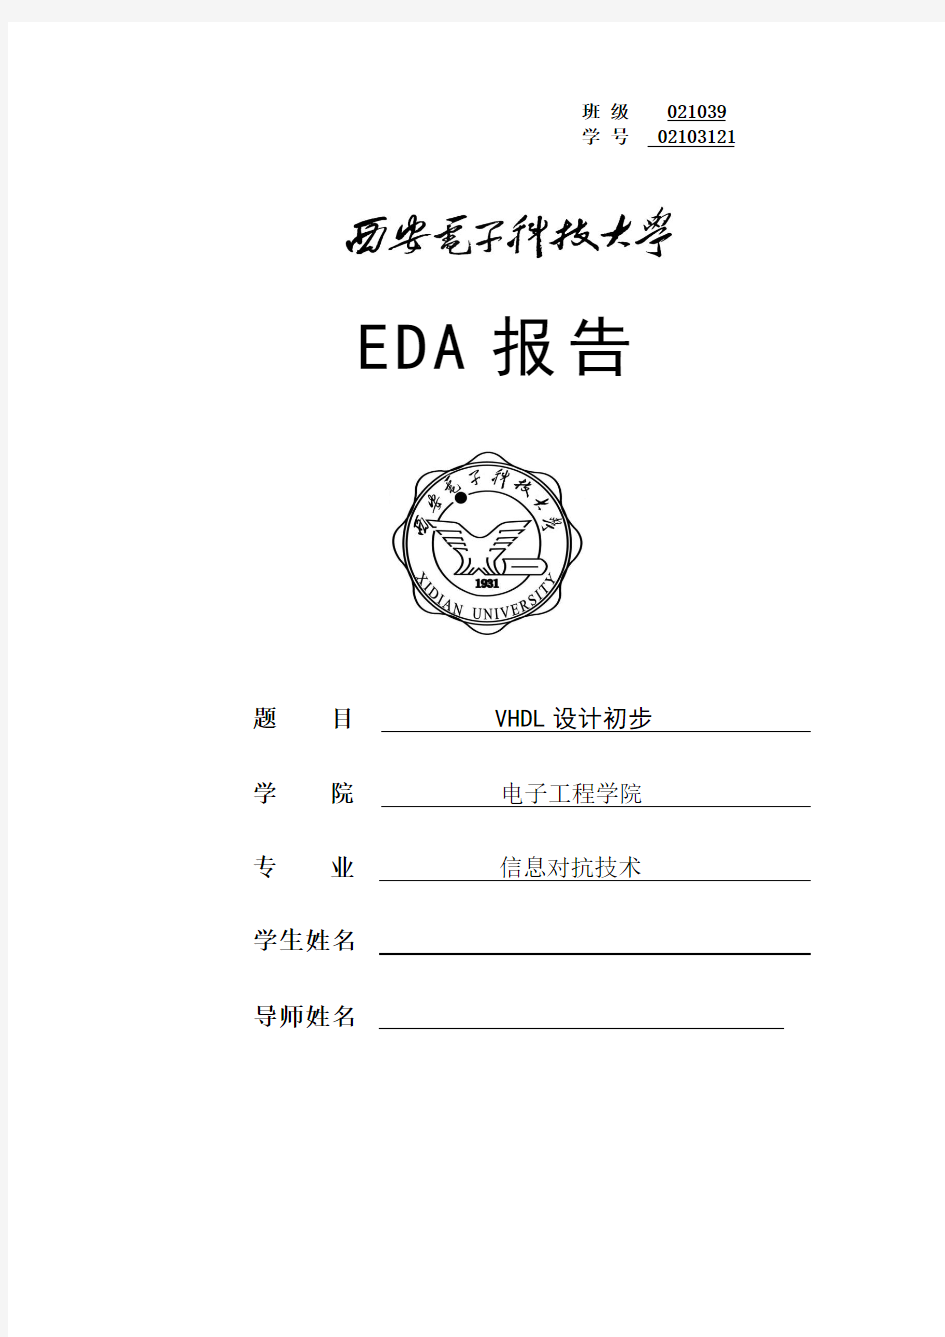 eda大作业